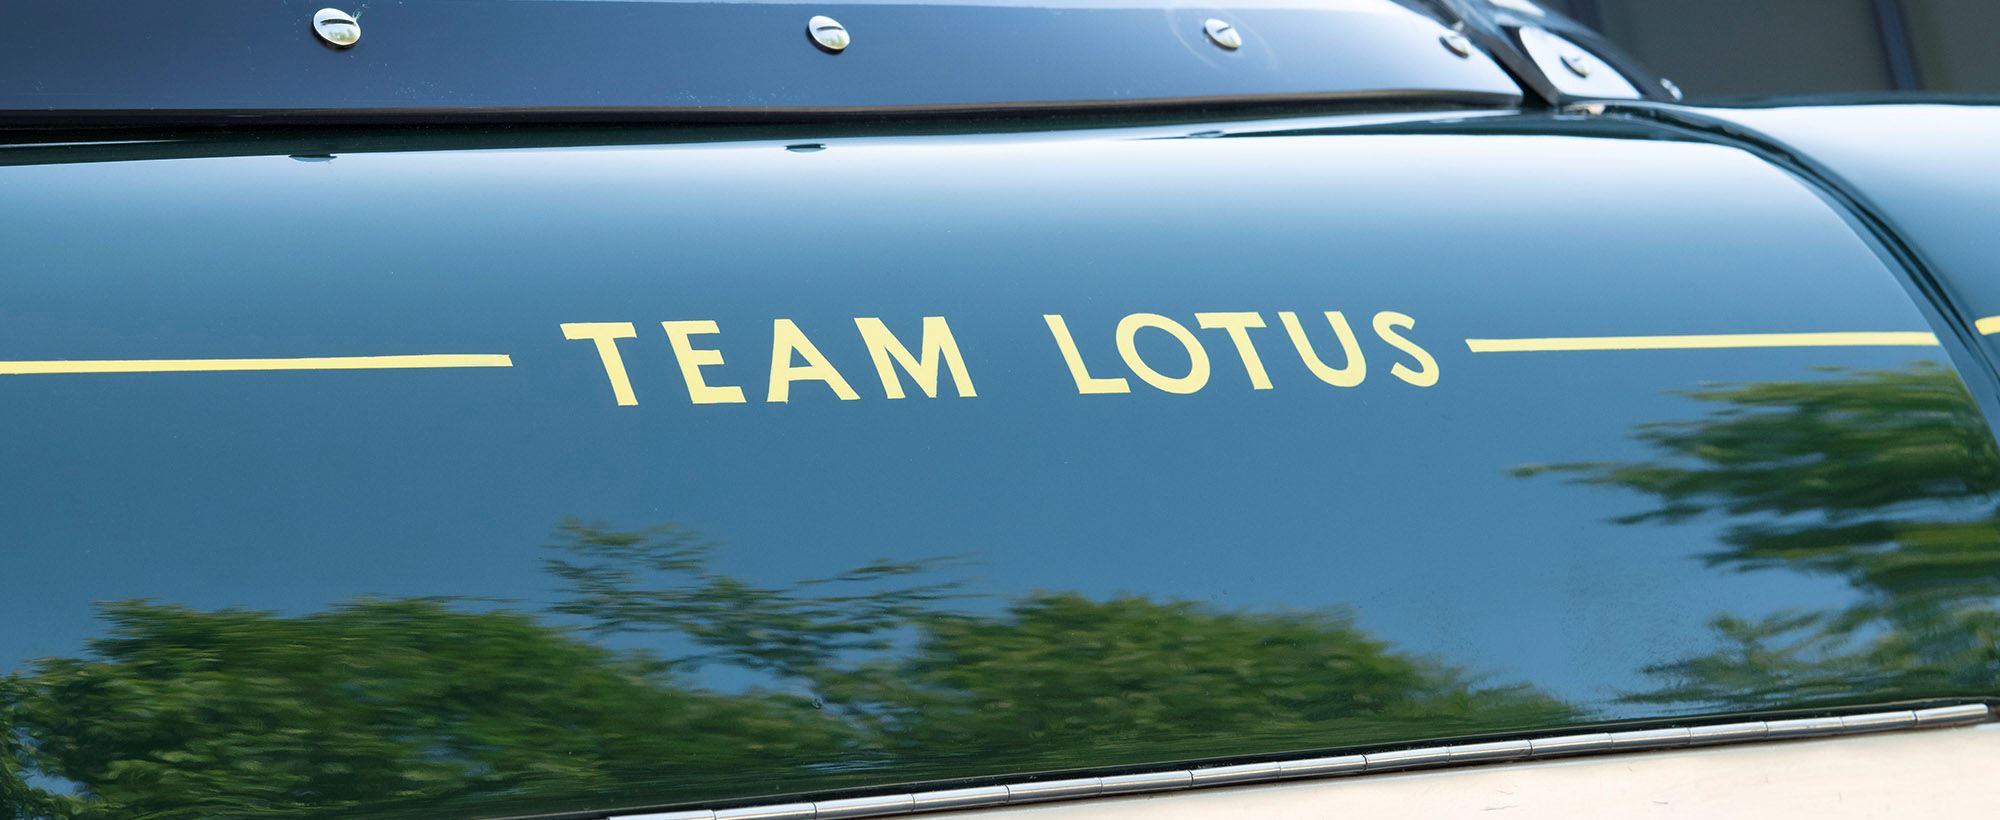 Lotus 040.jpg